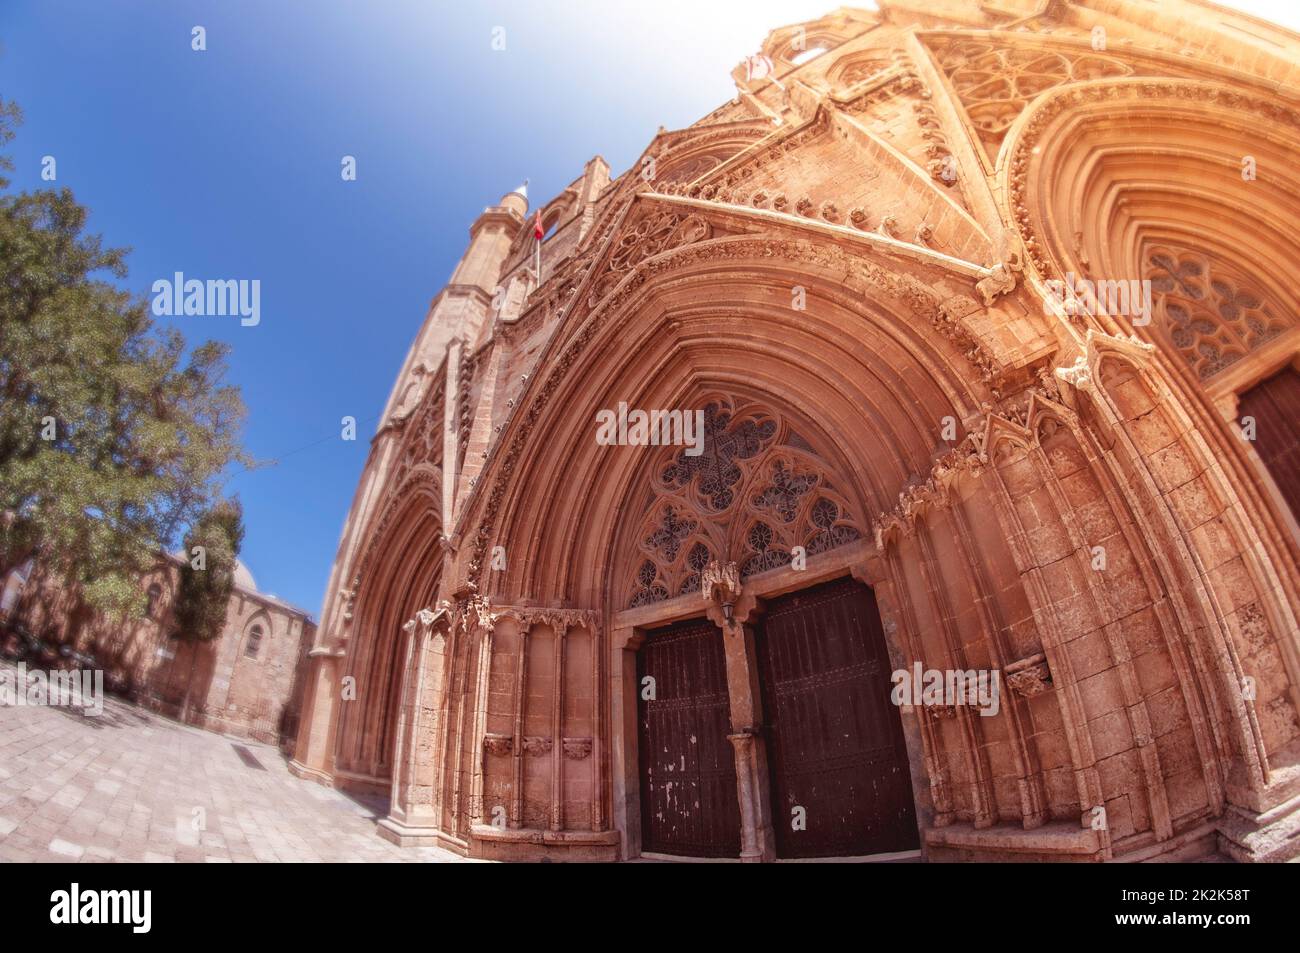 Facade of Lala Mustafa Pasha Mosque. Famagusta, Cyprus Stock Photo